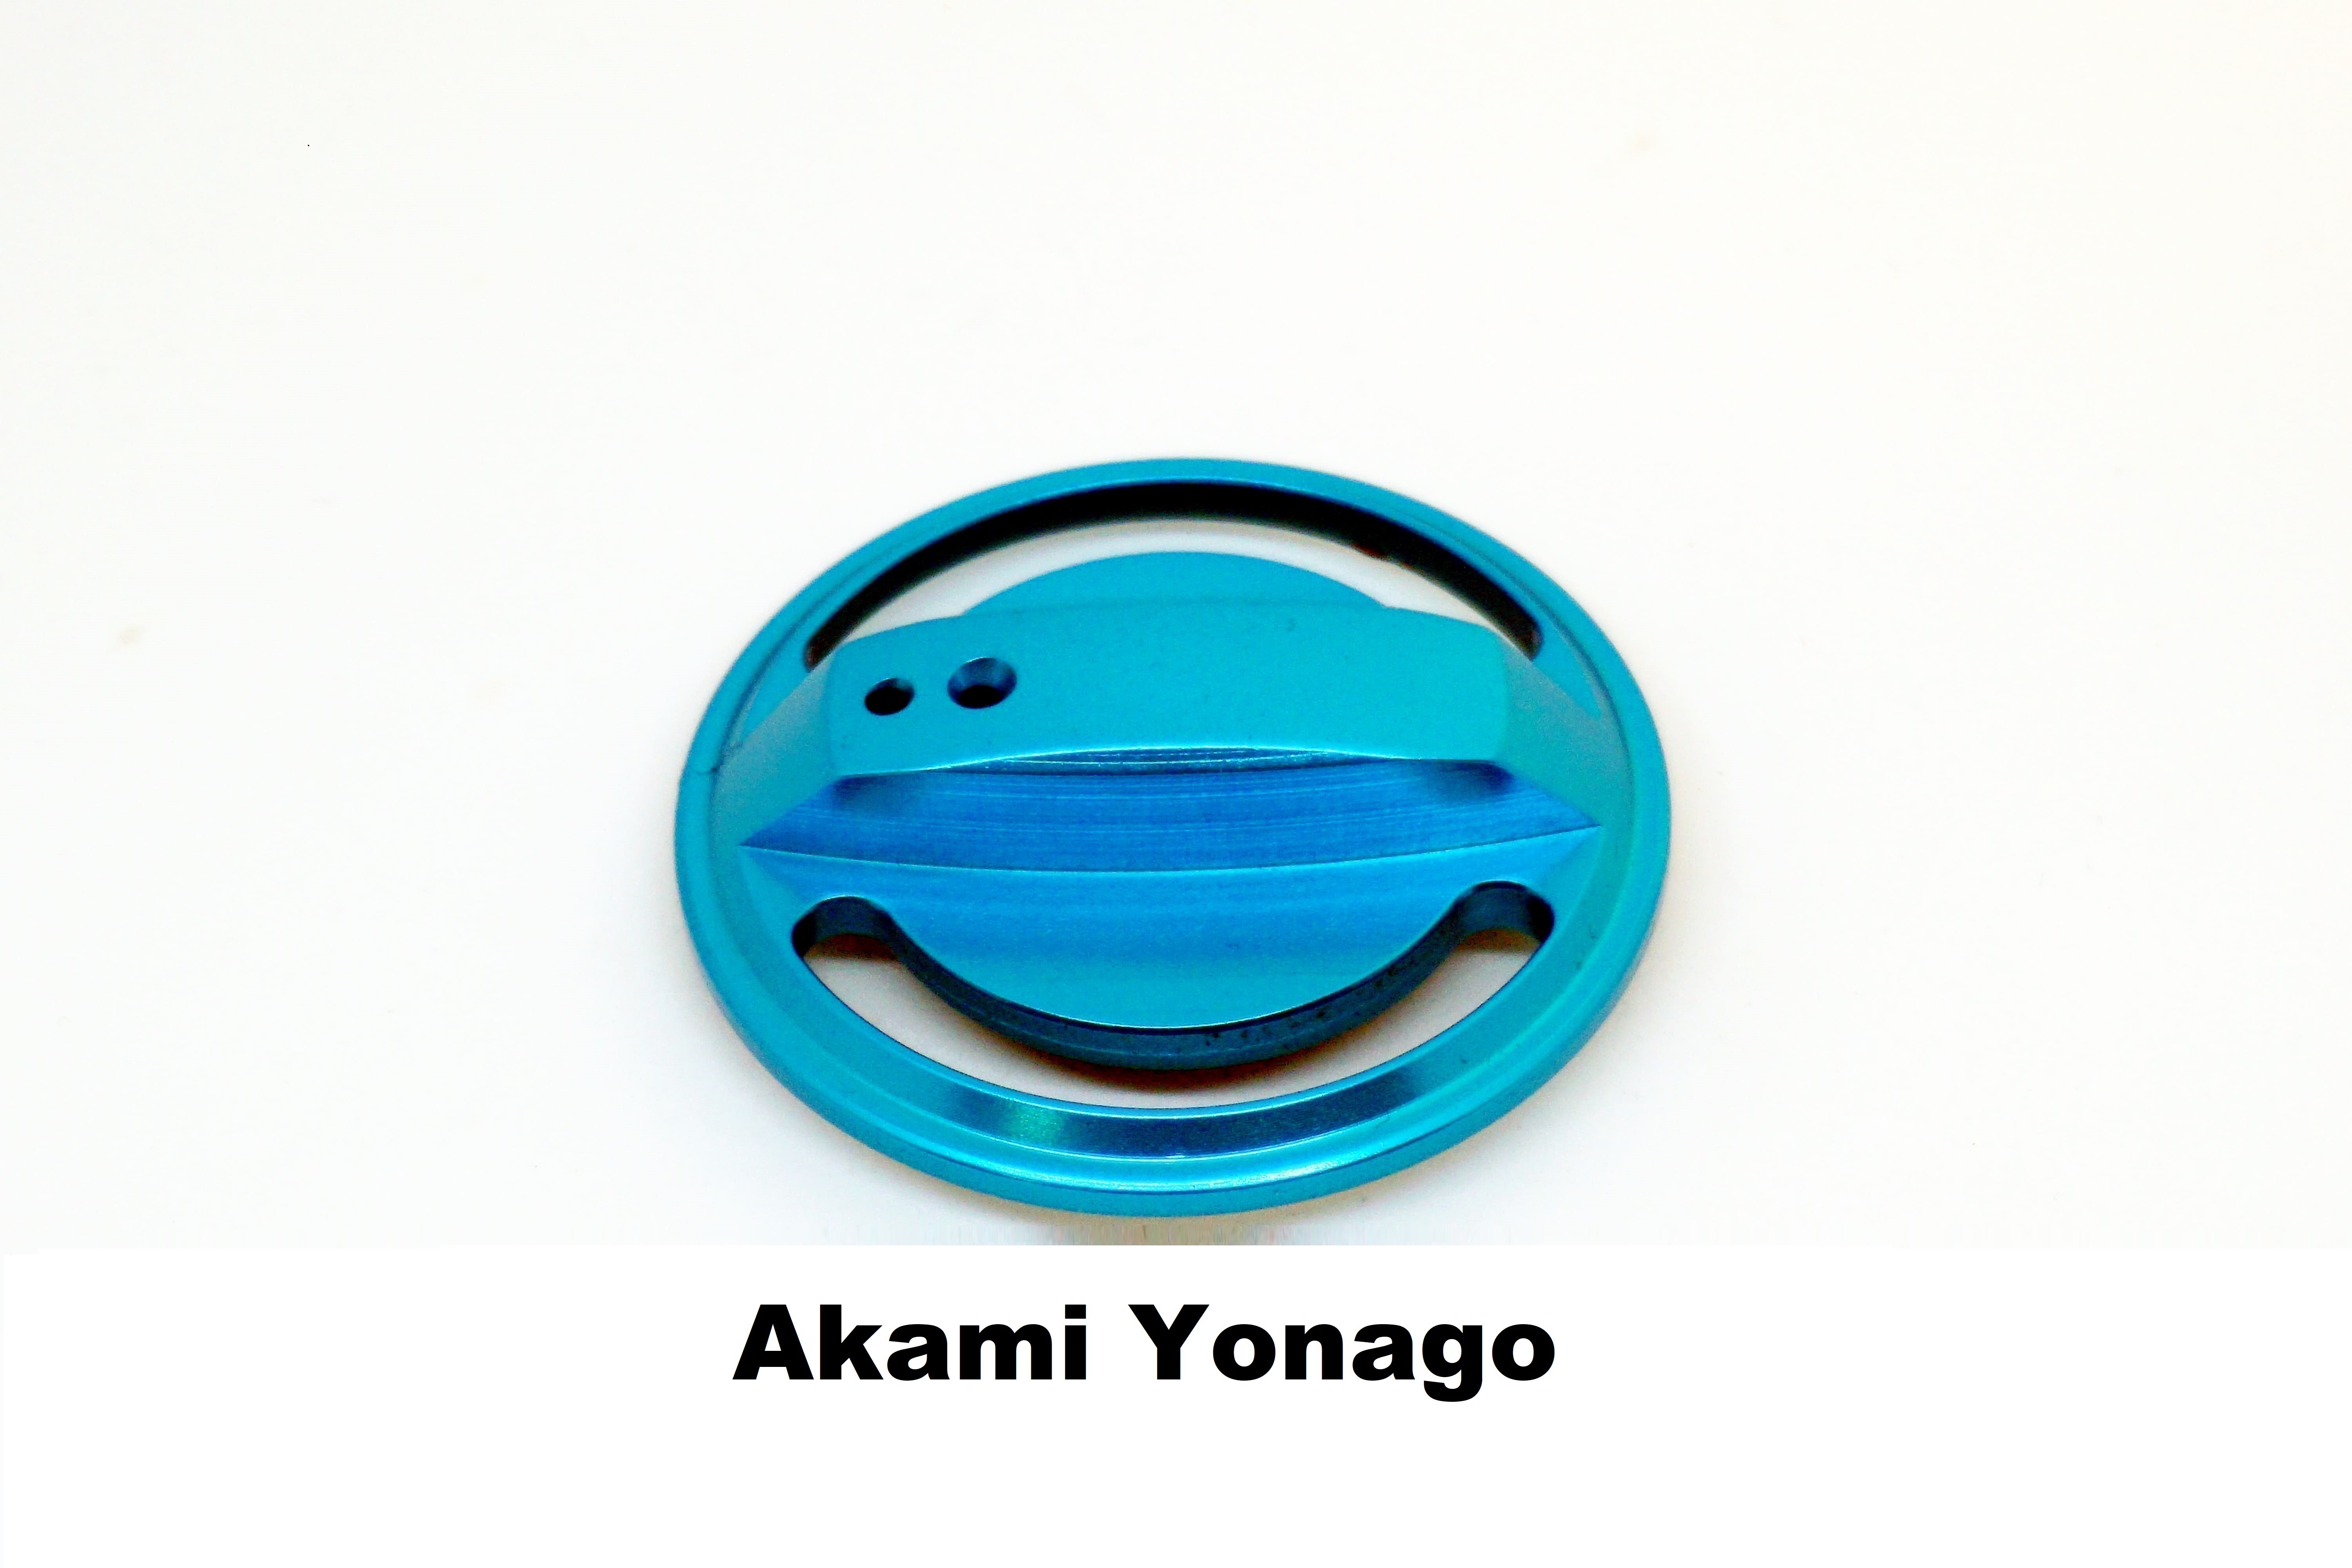 Drag Knob for Akami Yonago